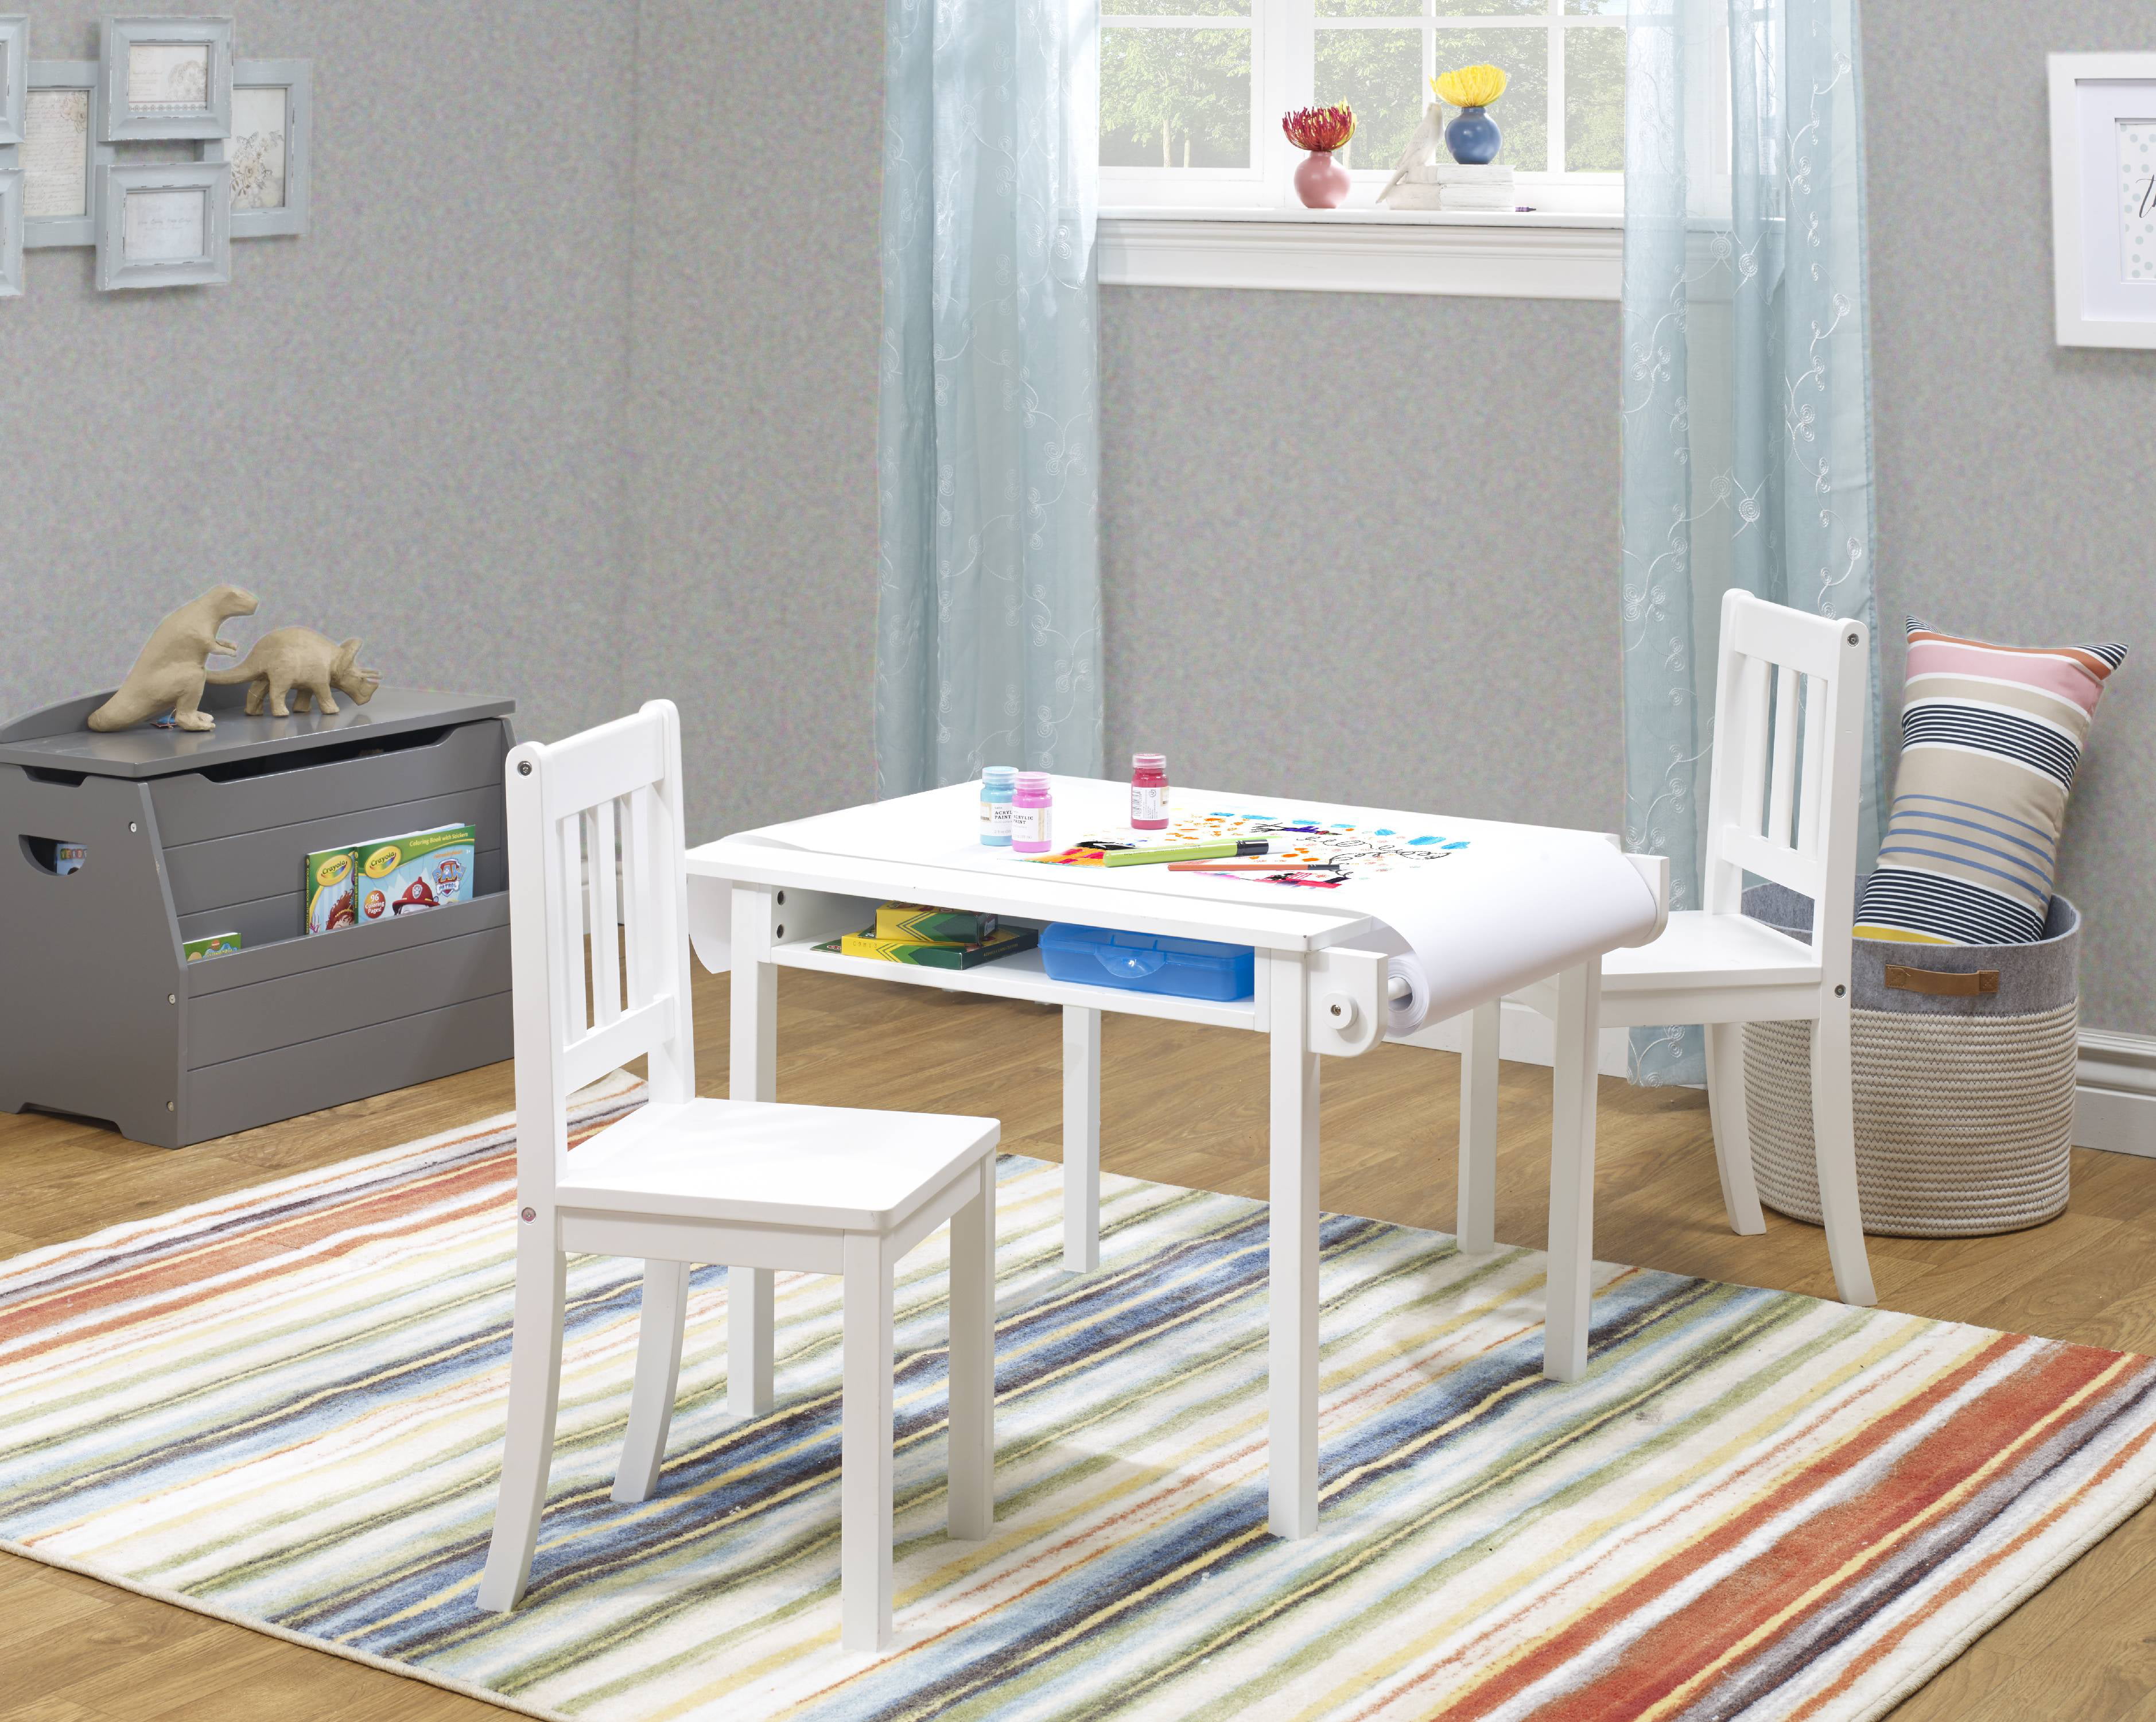 TMNT Boys Kids Desk Chair Table Set Child Play Furniture Toy Toddler Storage